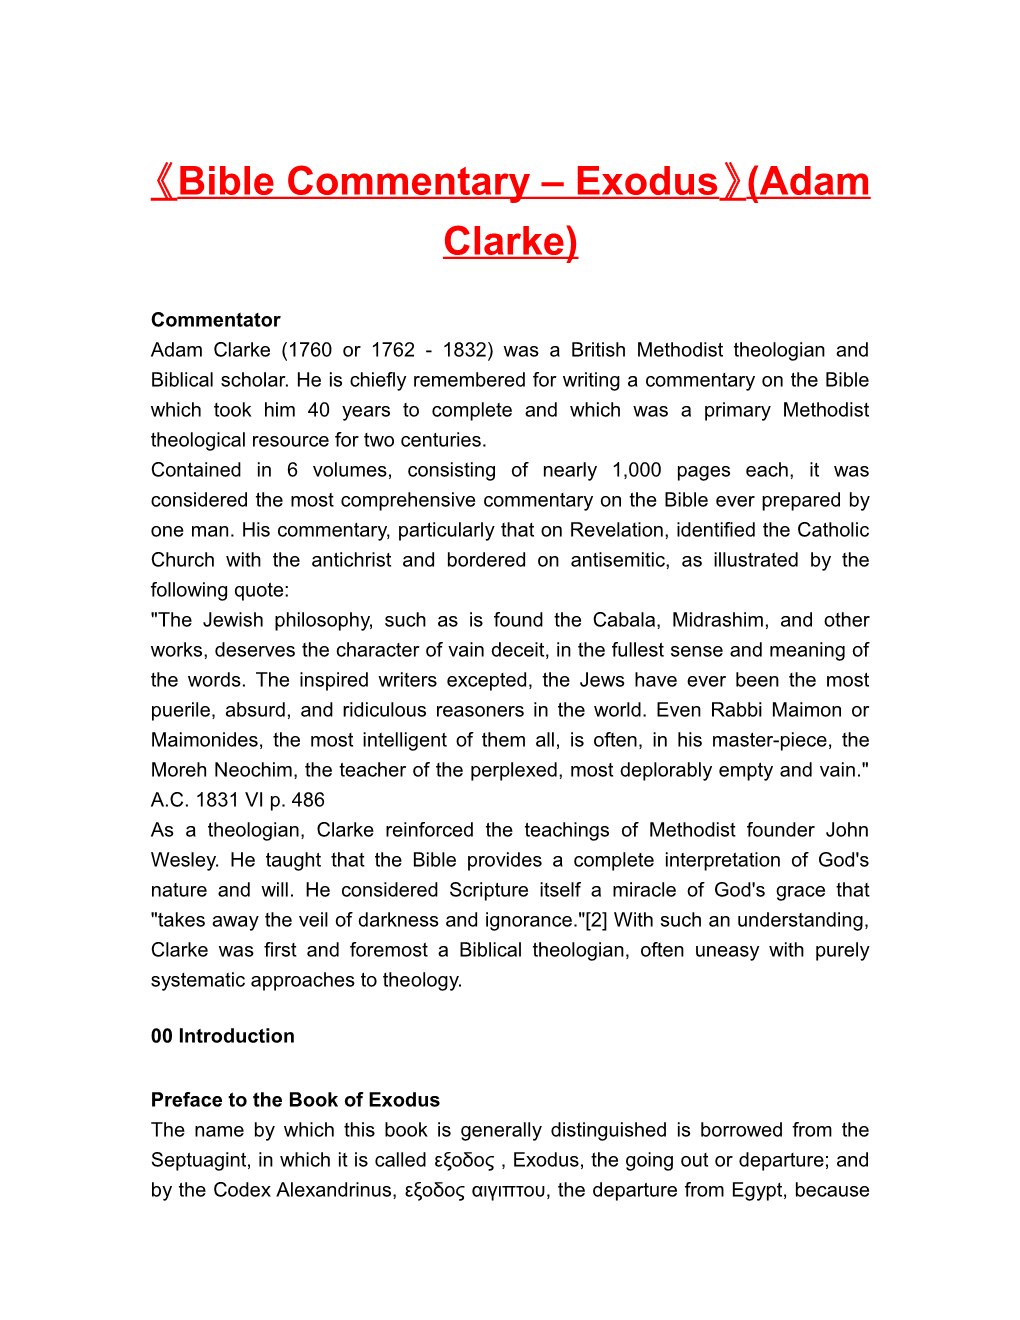 Bible Commentary Exodus (Adam Clarke)